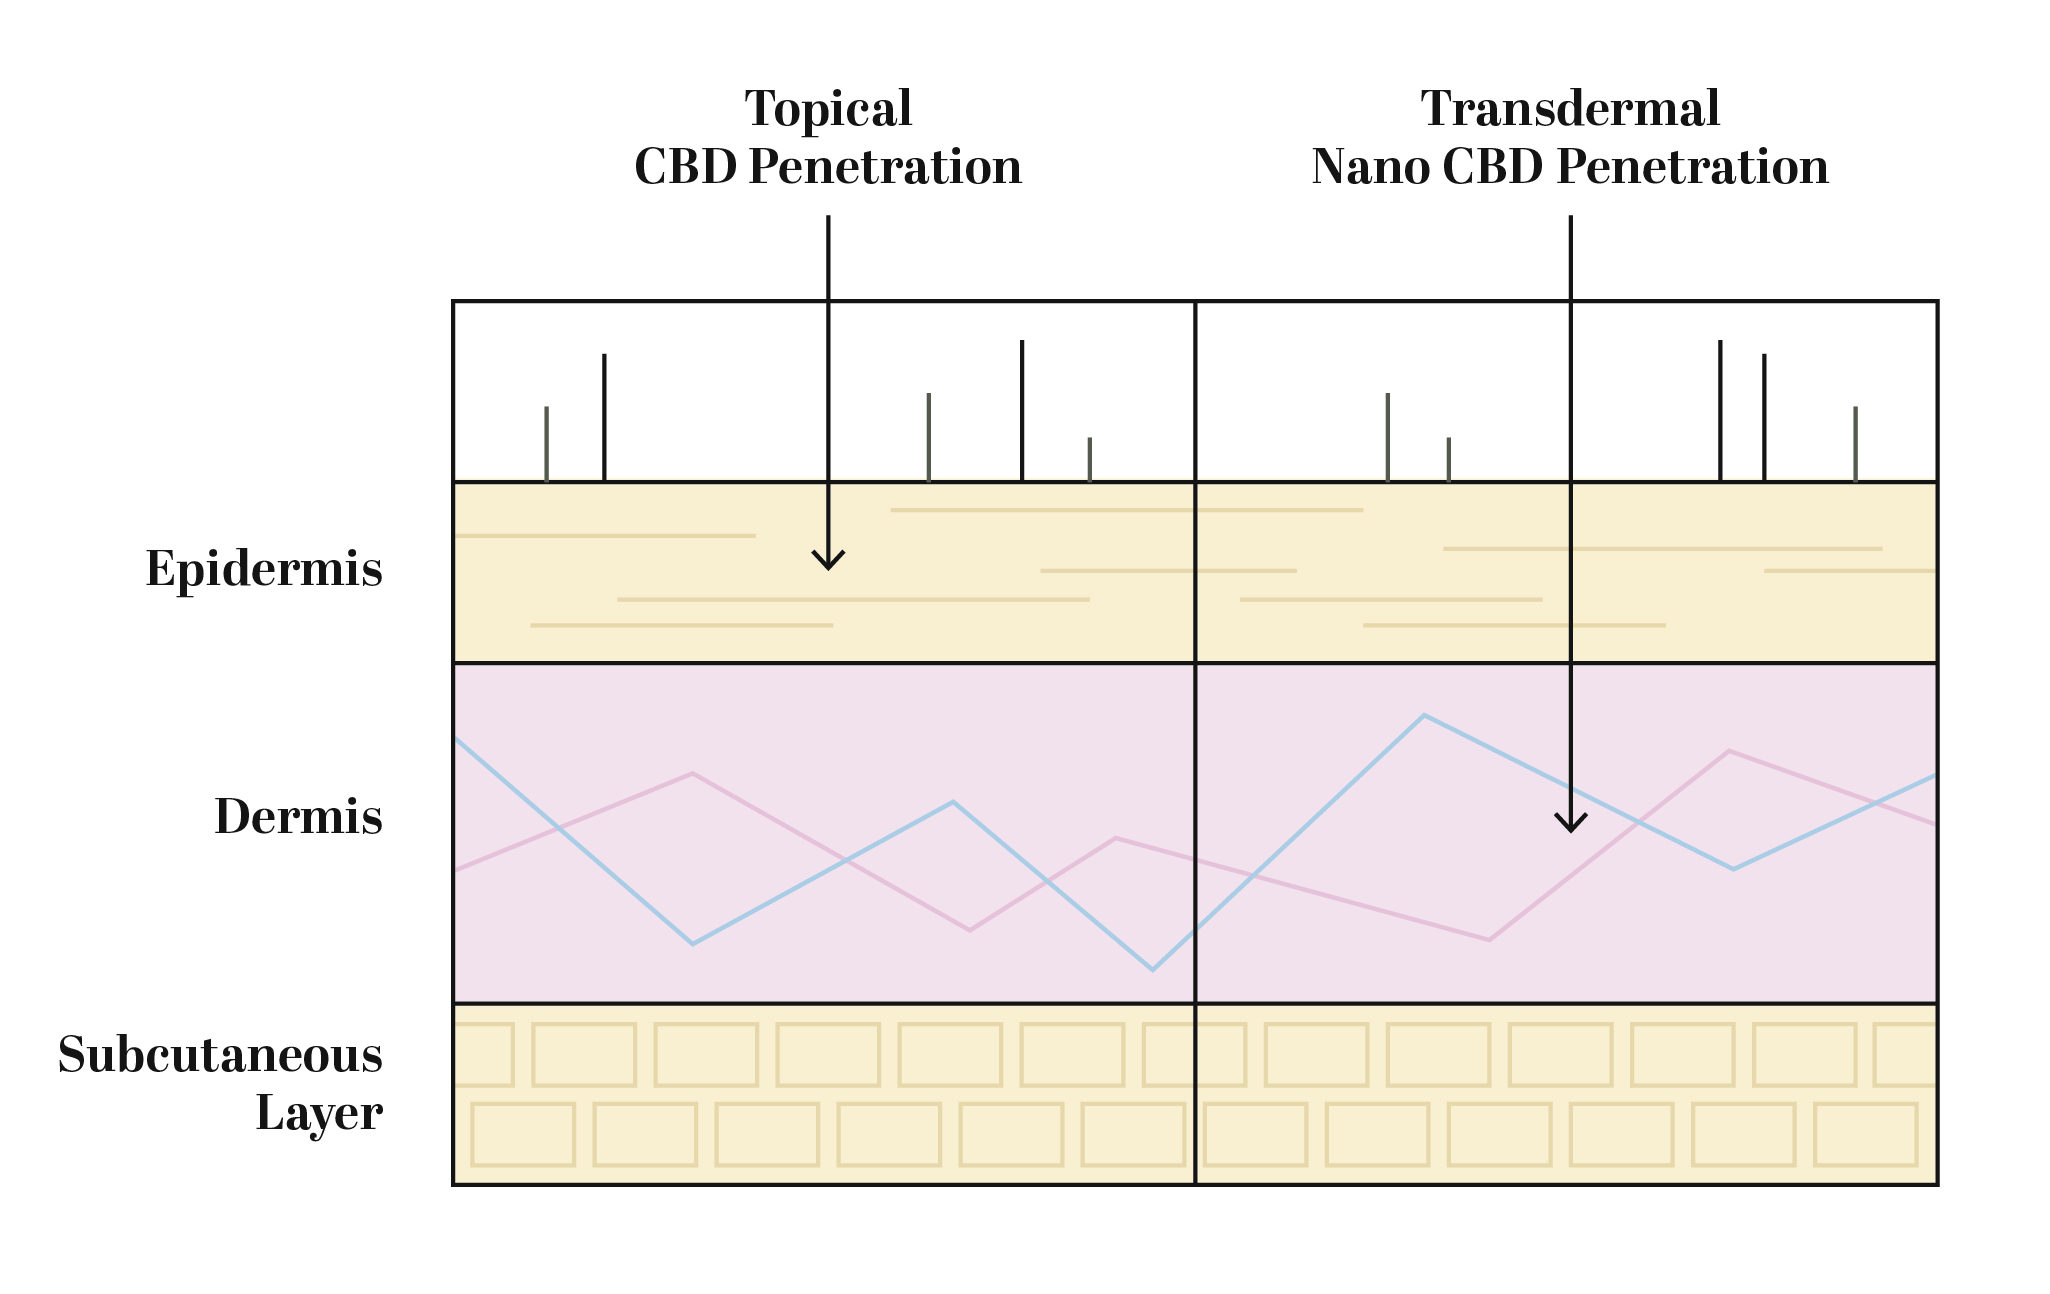 Scientific Image Showing the Penetration Levels of Topical CBD vs. Transdermal Nano CBD